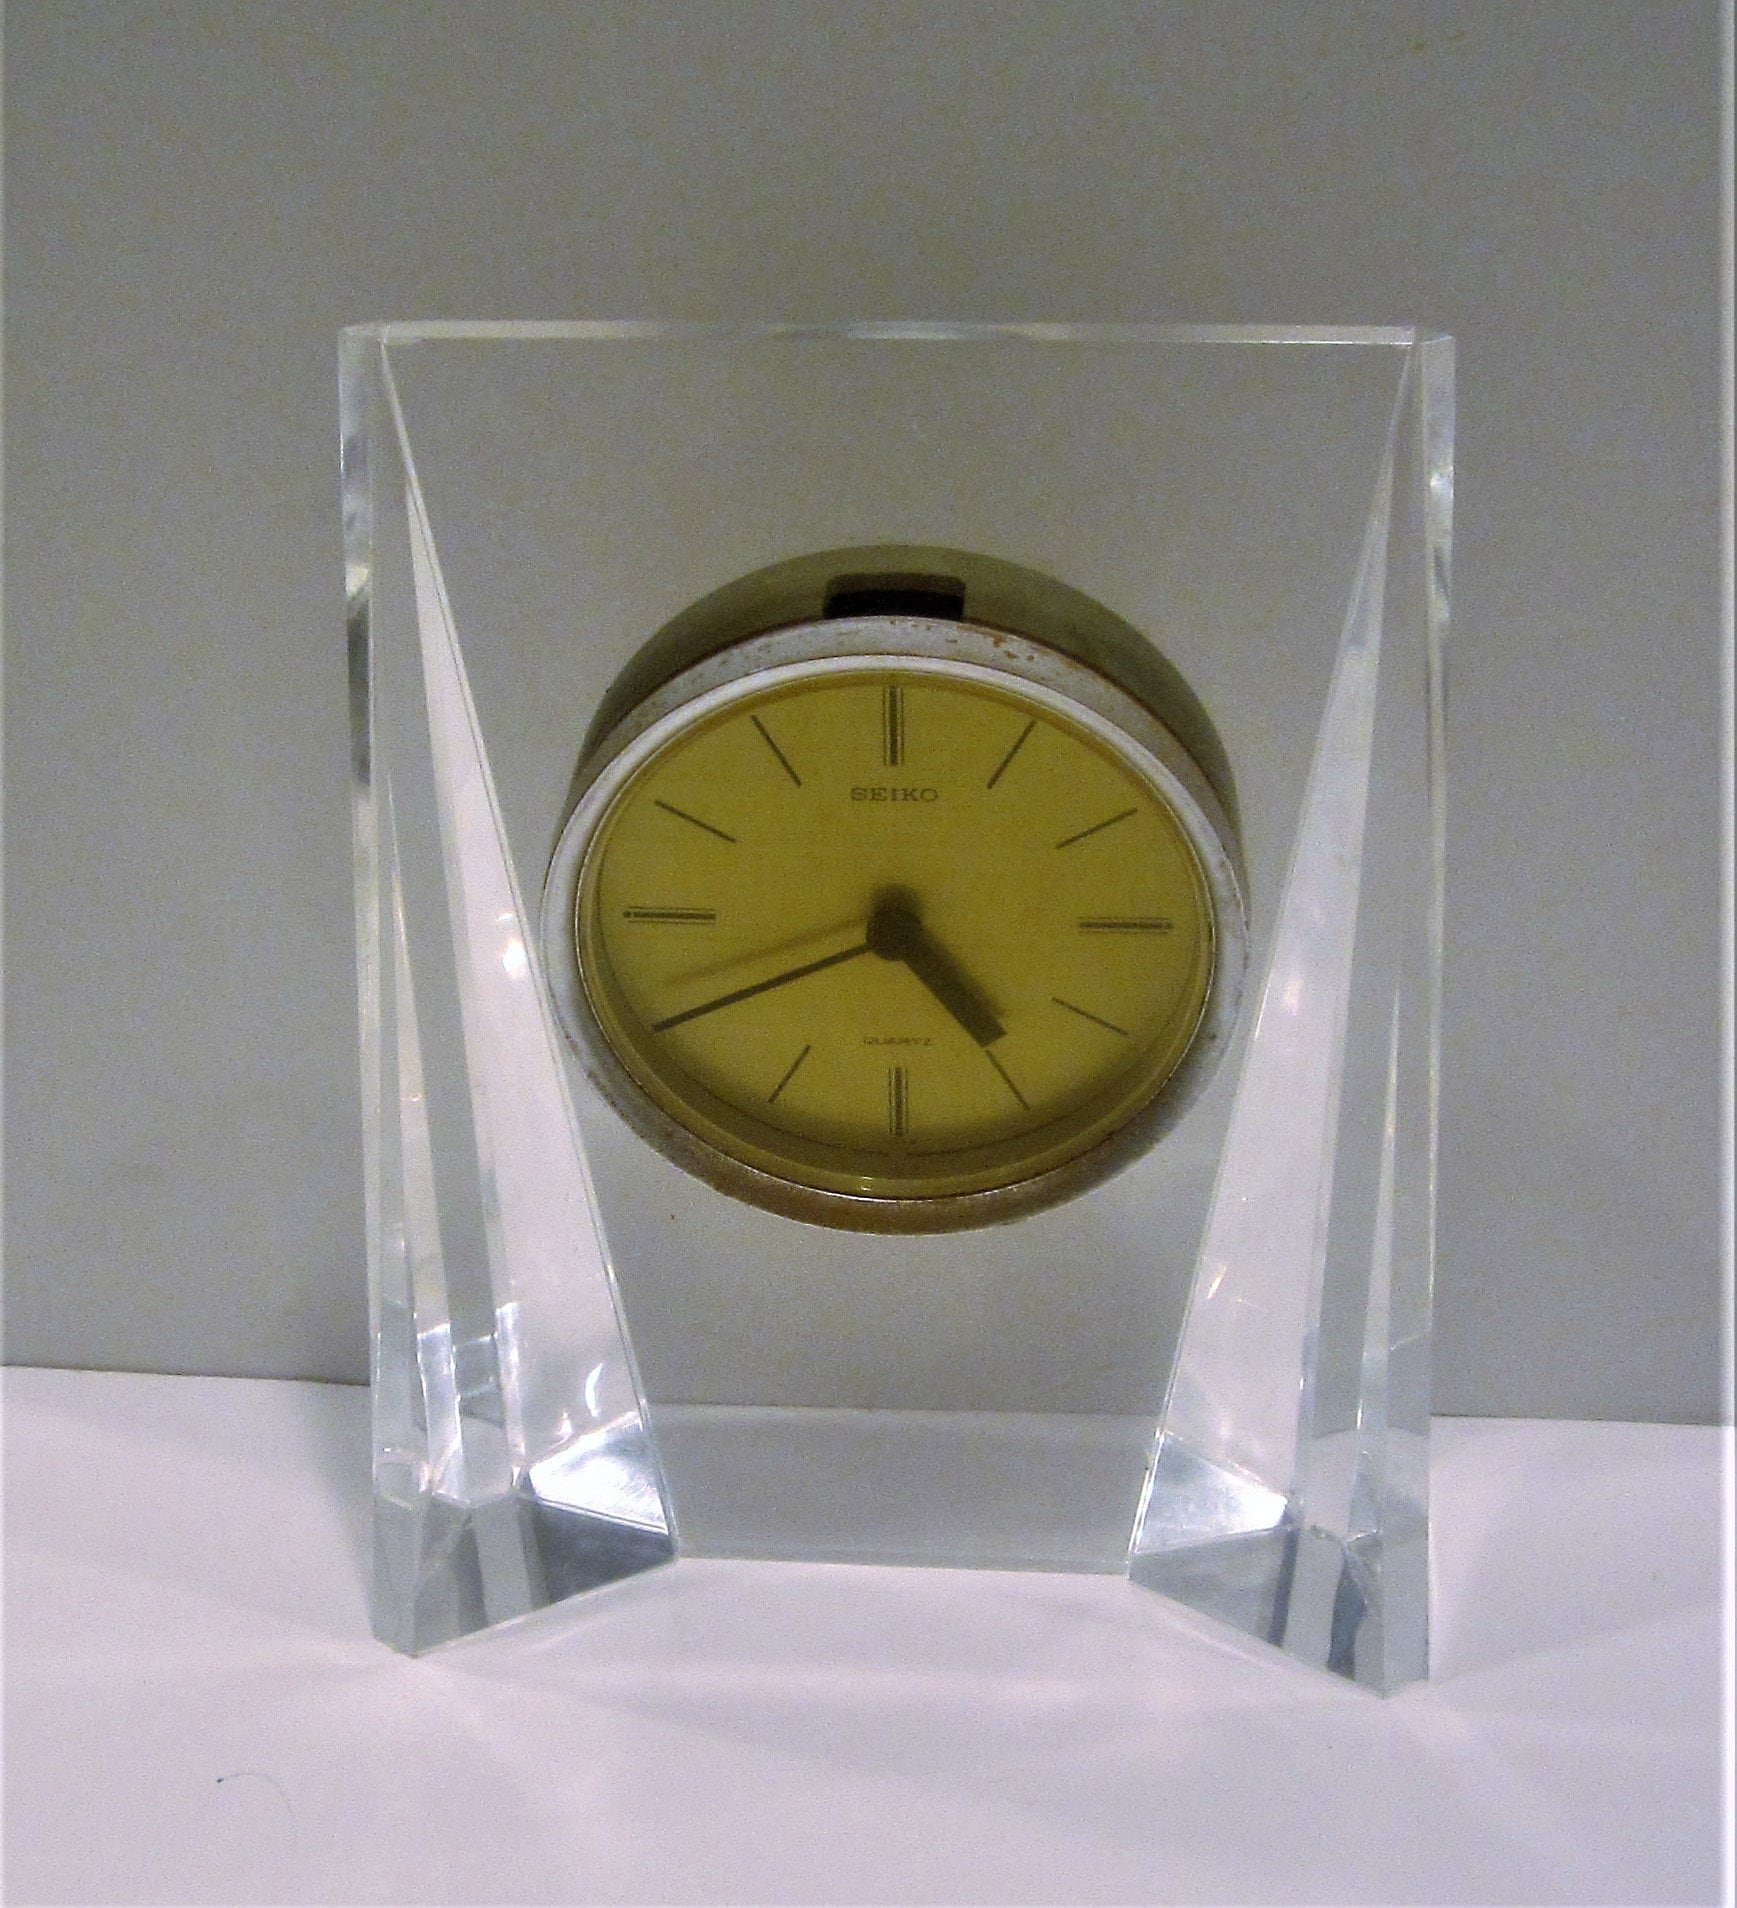 Seiko Pendulum Clock - Etsy